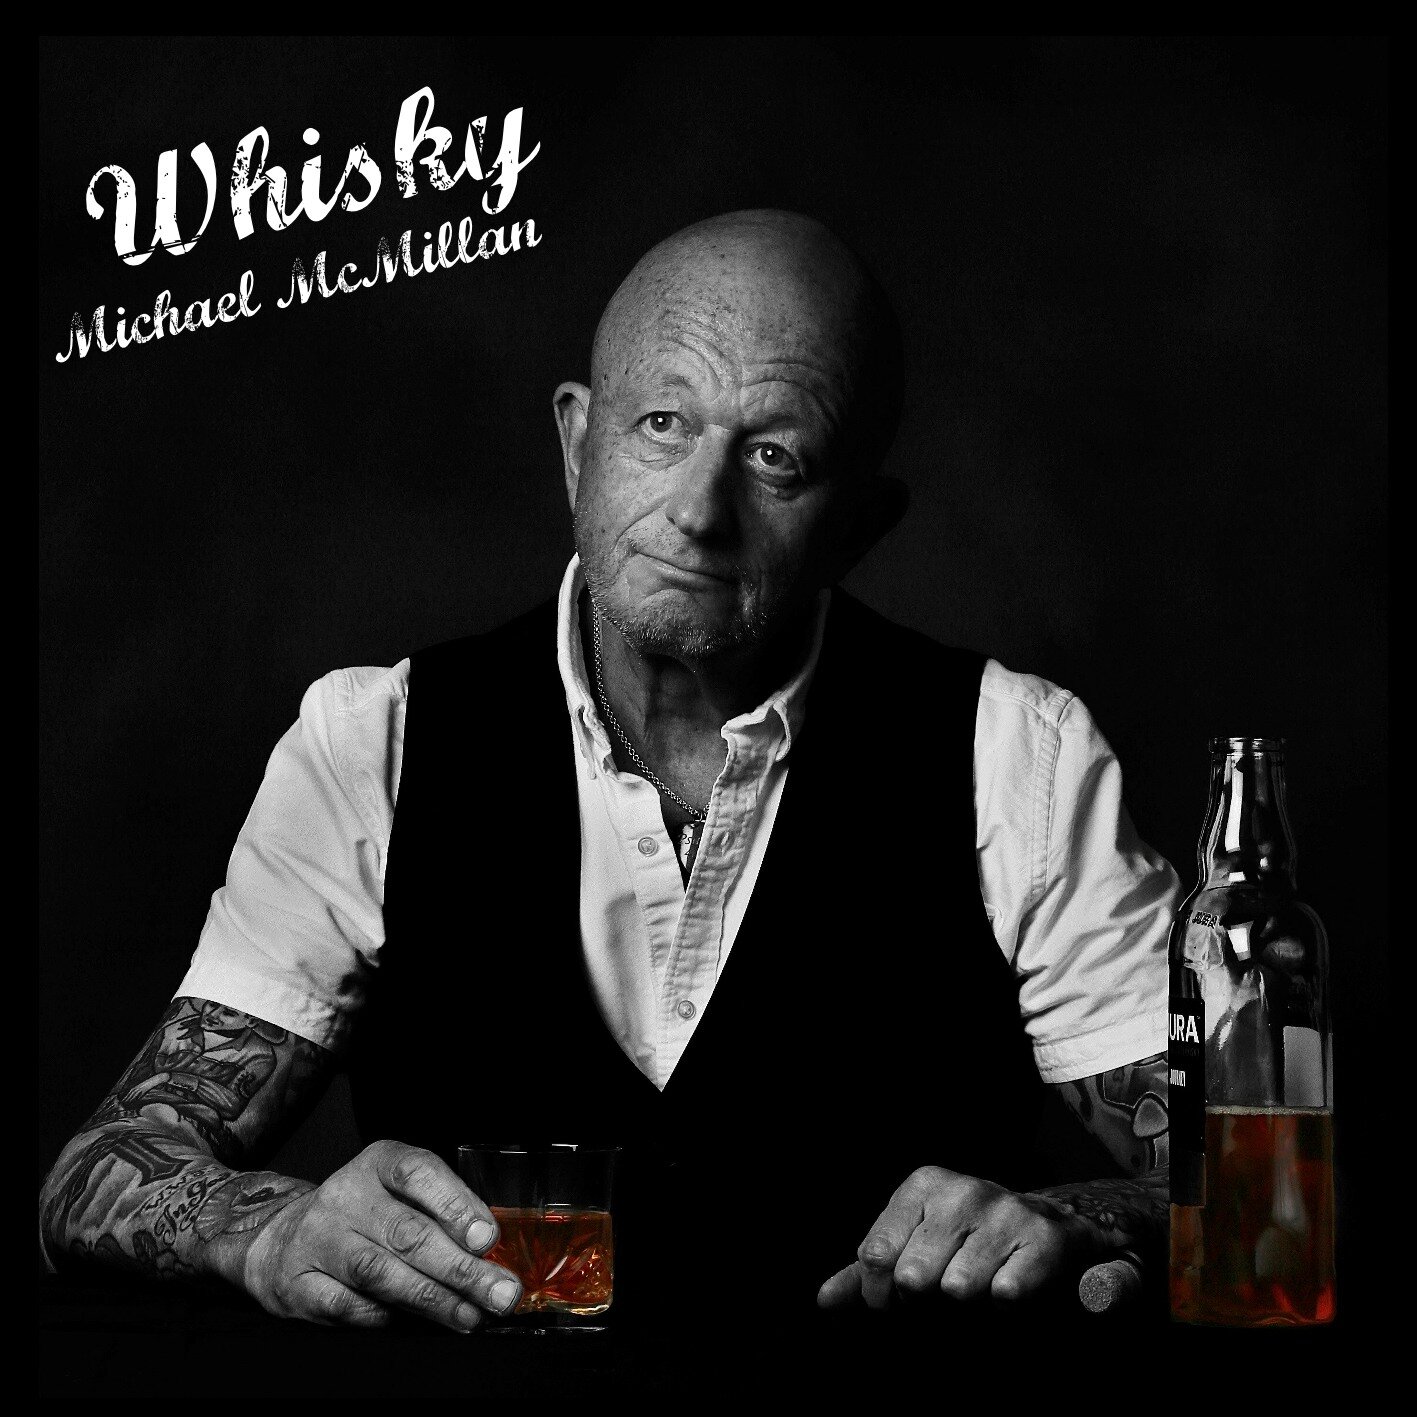 Whisky Main Image.jpg